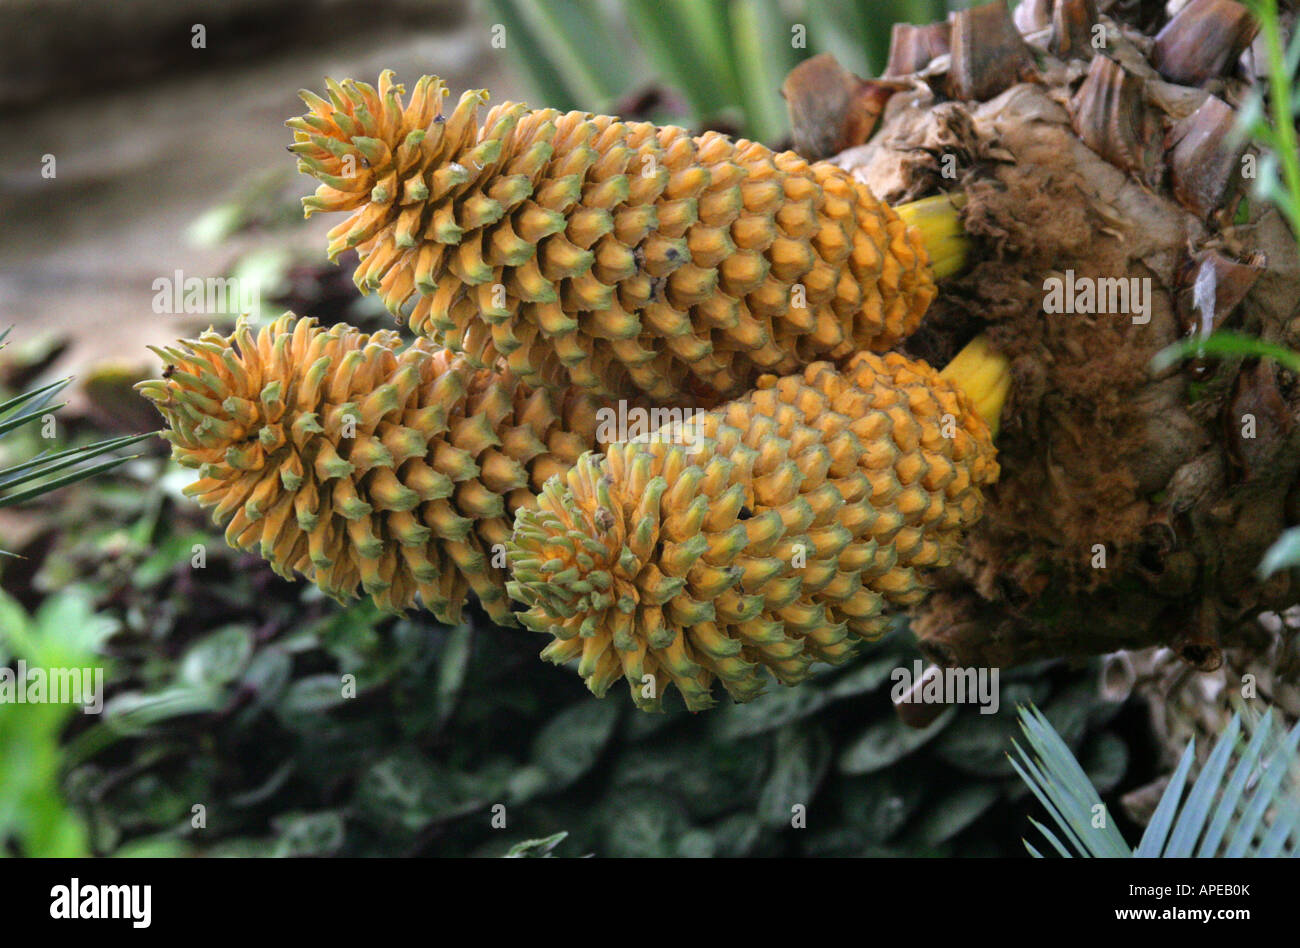 Eastern Cape Giant Cycad, Encephalartos altensteinii, Zamiaceae. A Rare Primitive Plant from South Africa Stock Photo